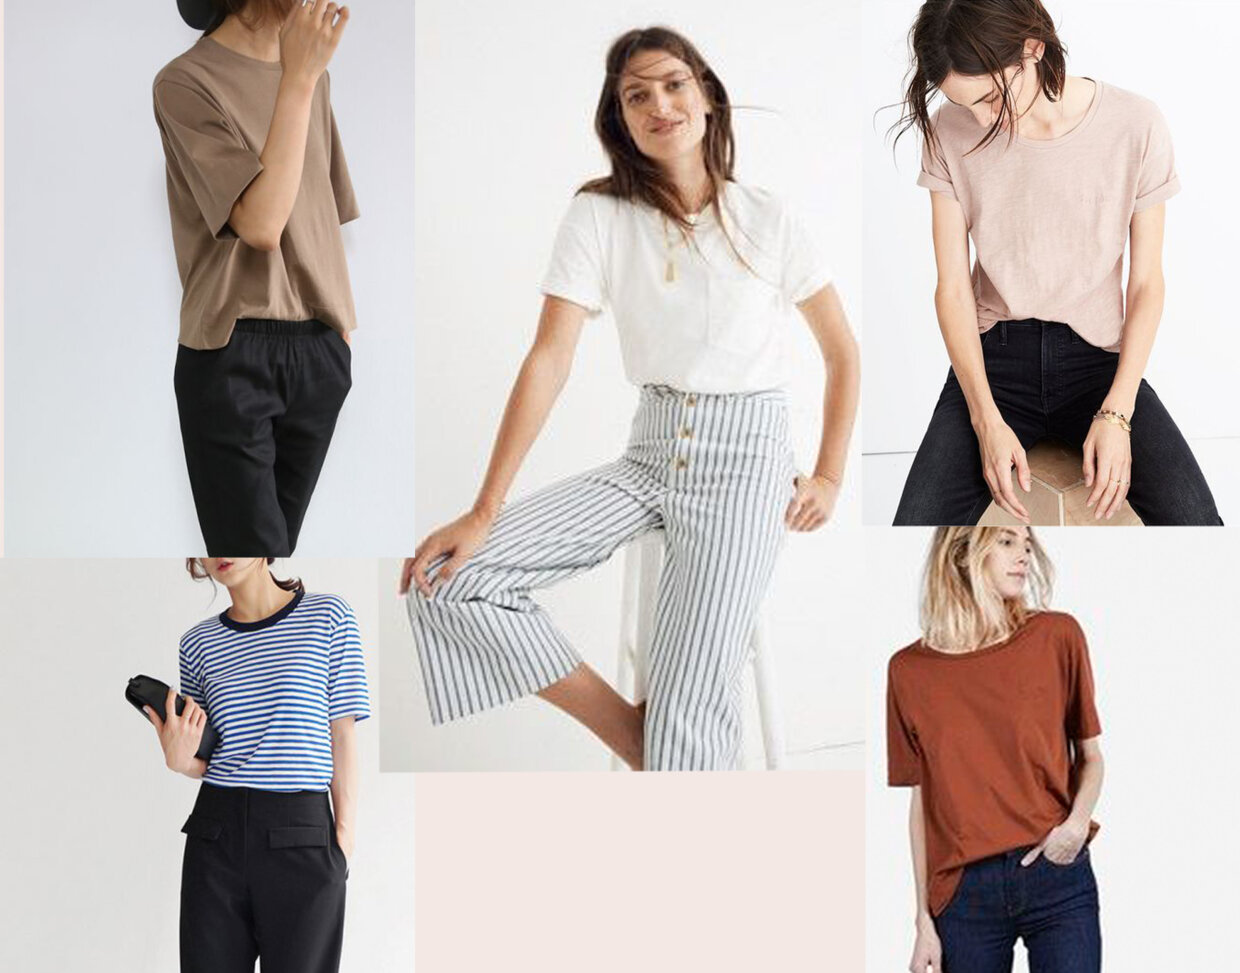 Free PDF sewing pattern: Laurel palazzo pants – Tiana's Closet